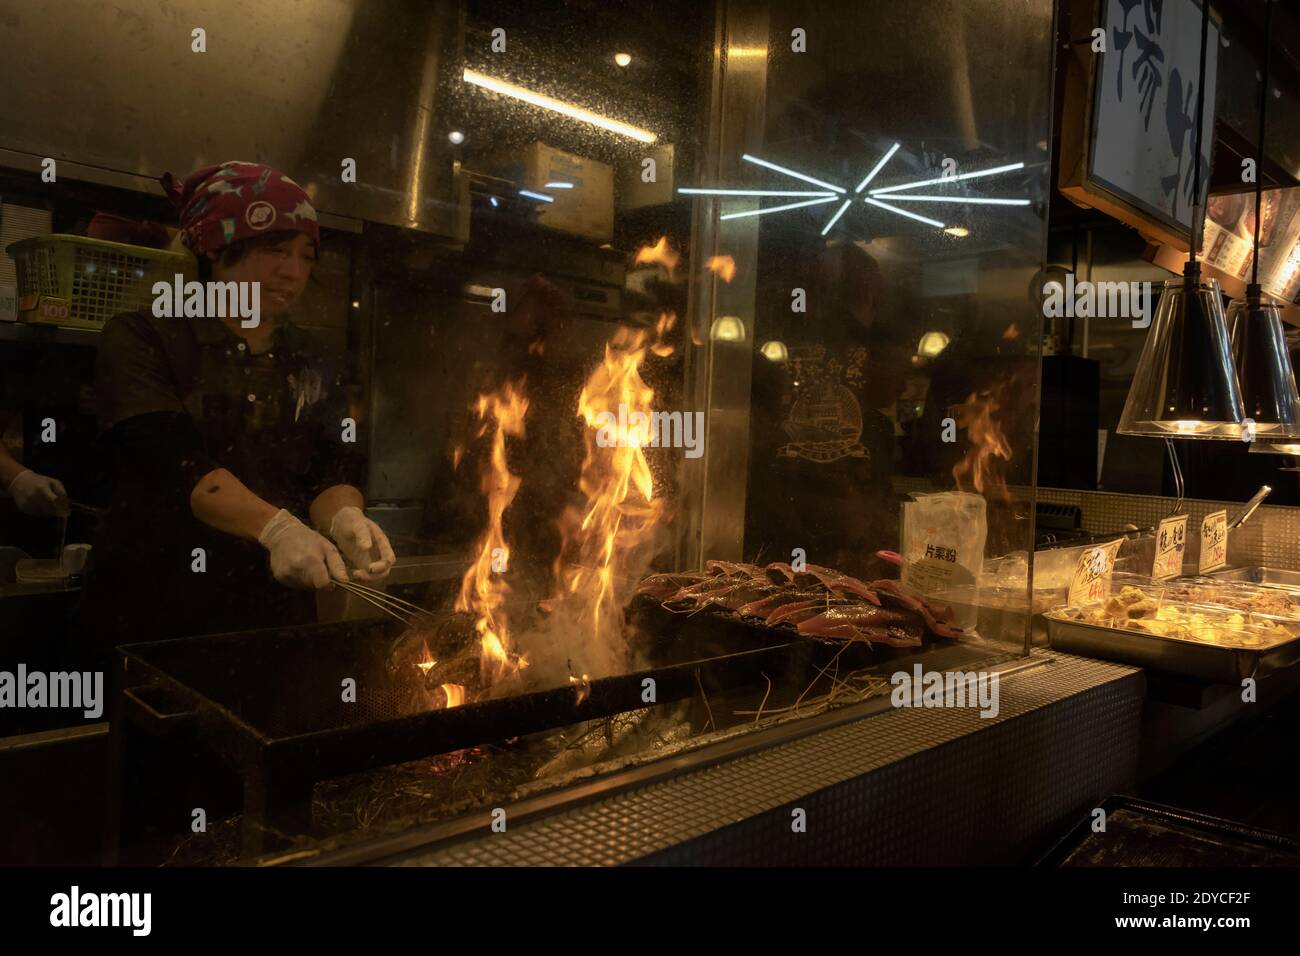 Cooking katsuo no tataki (seared bonito) over an open flame, Kochi, Japan Stock Photo